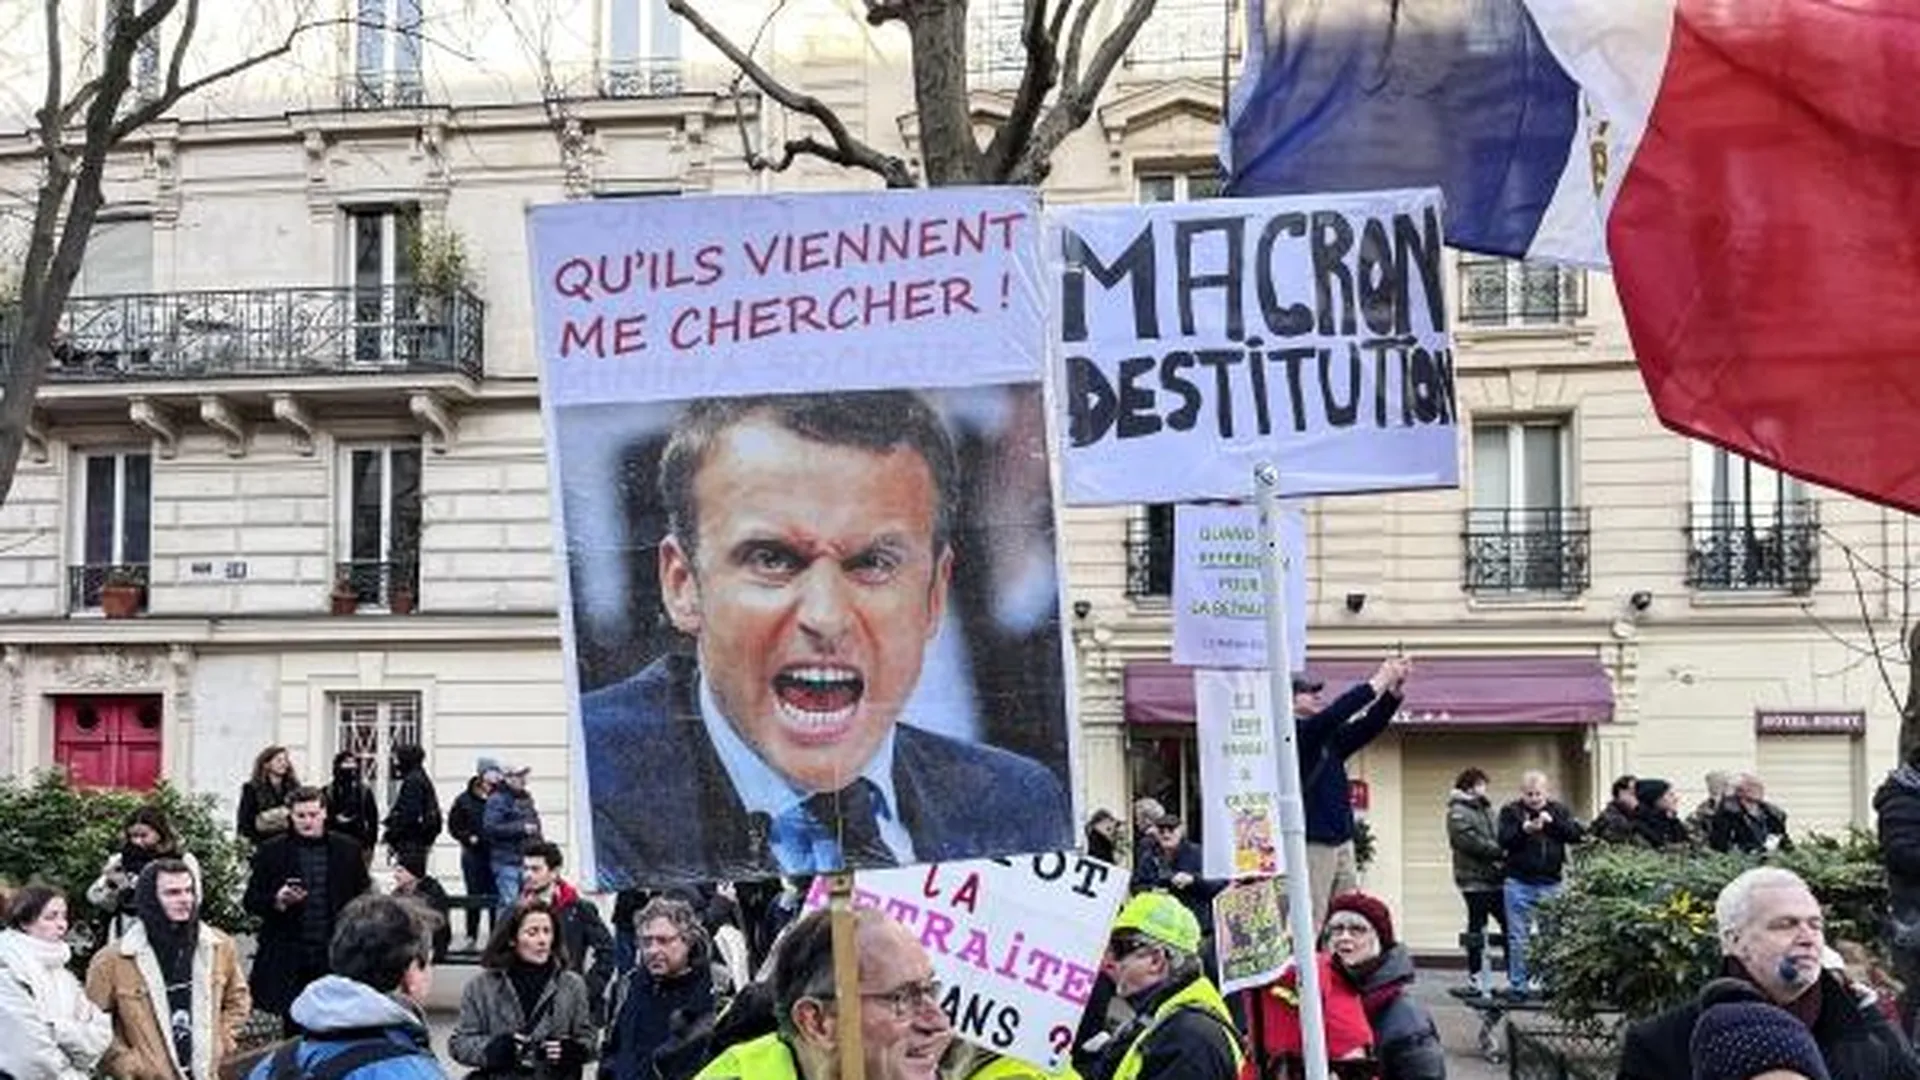 Участники акции протеста в Париже против повышения пенсионного возраста во Франции, 31 марта